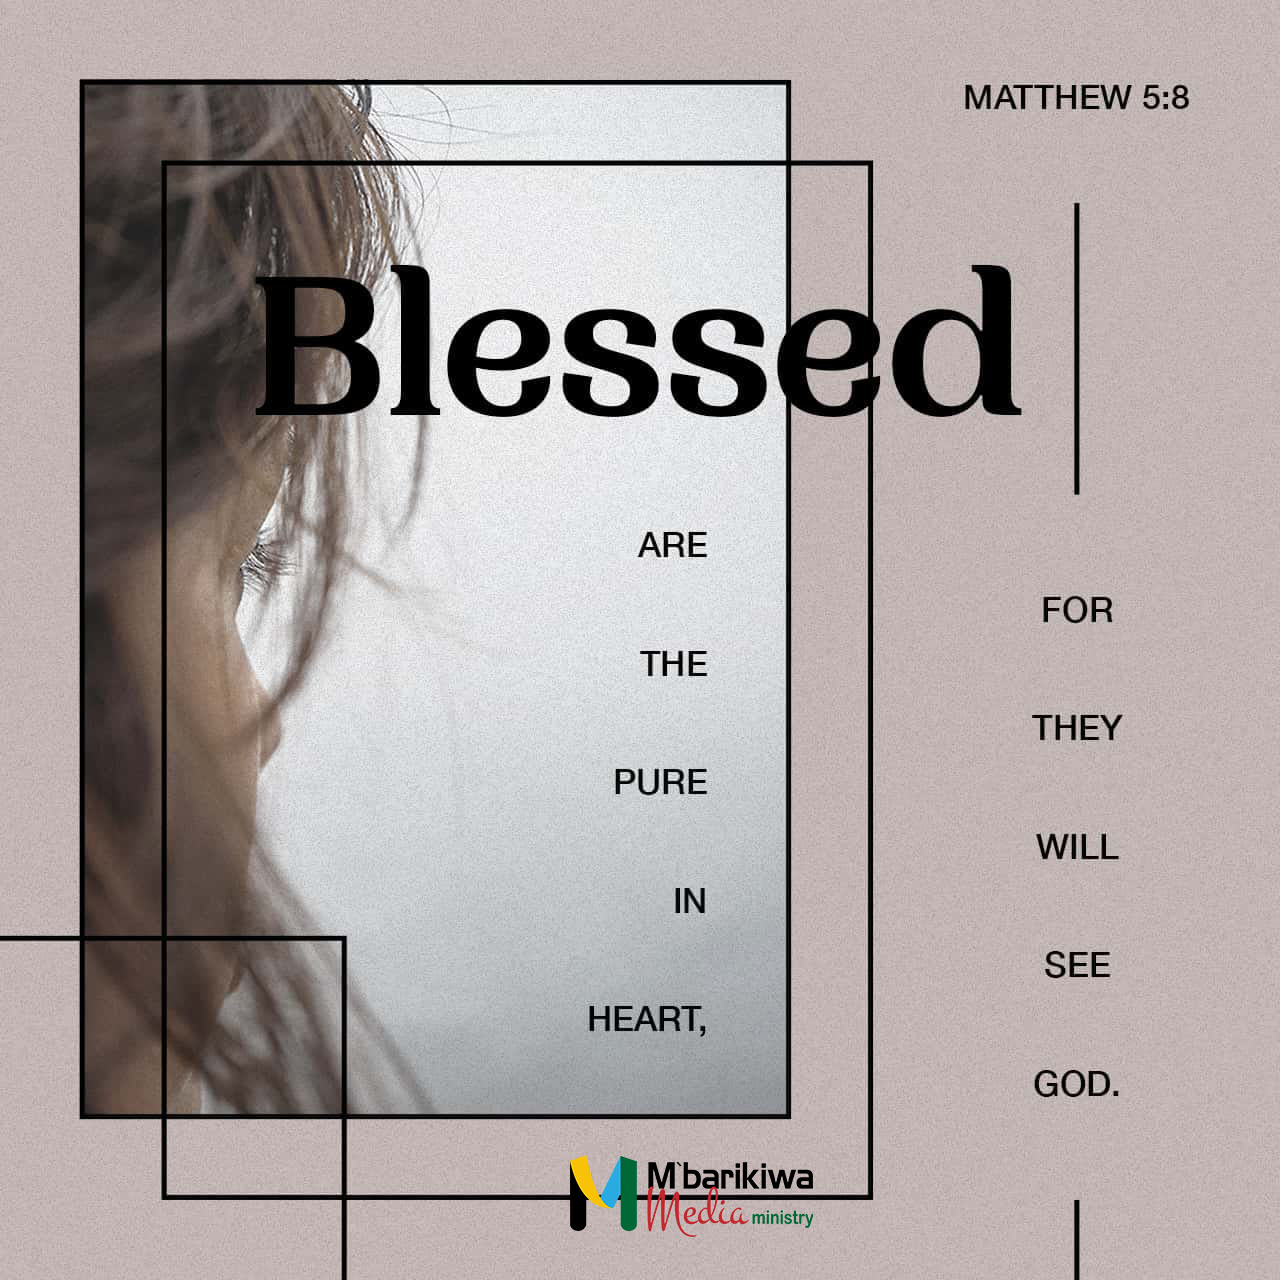 Verse of the Day: Matthew 5:8 KJV